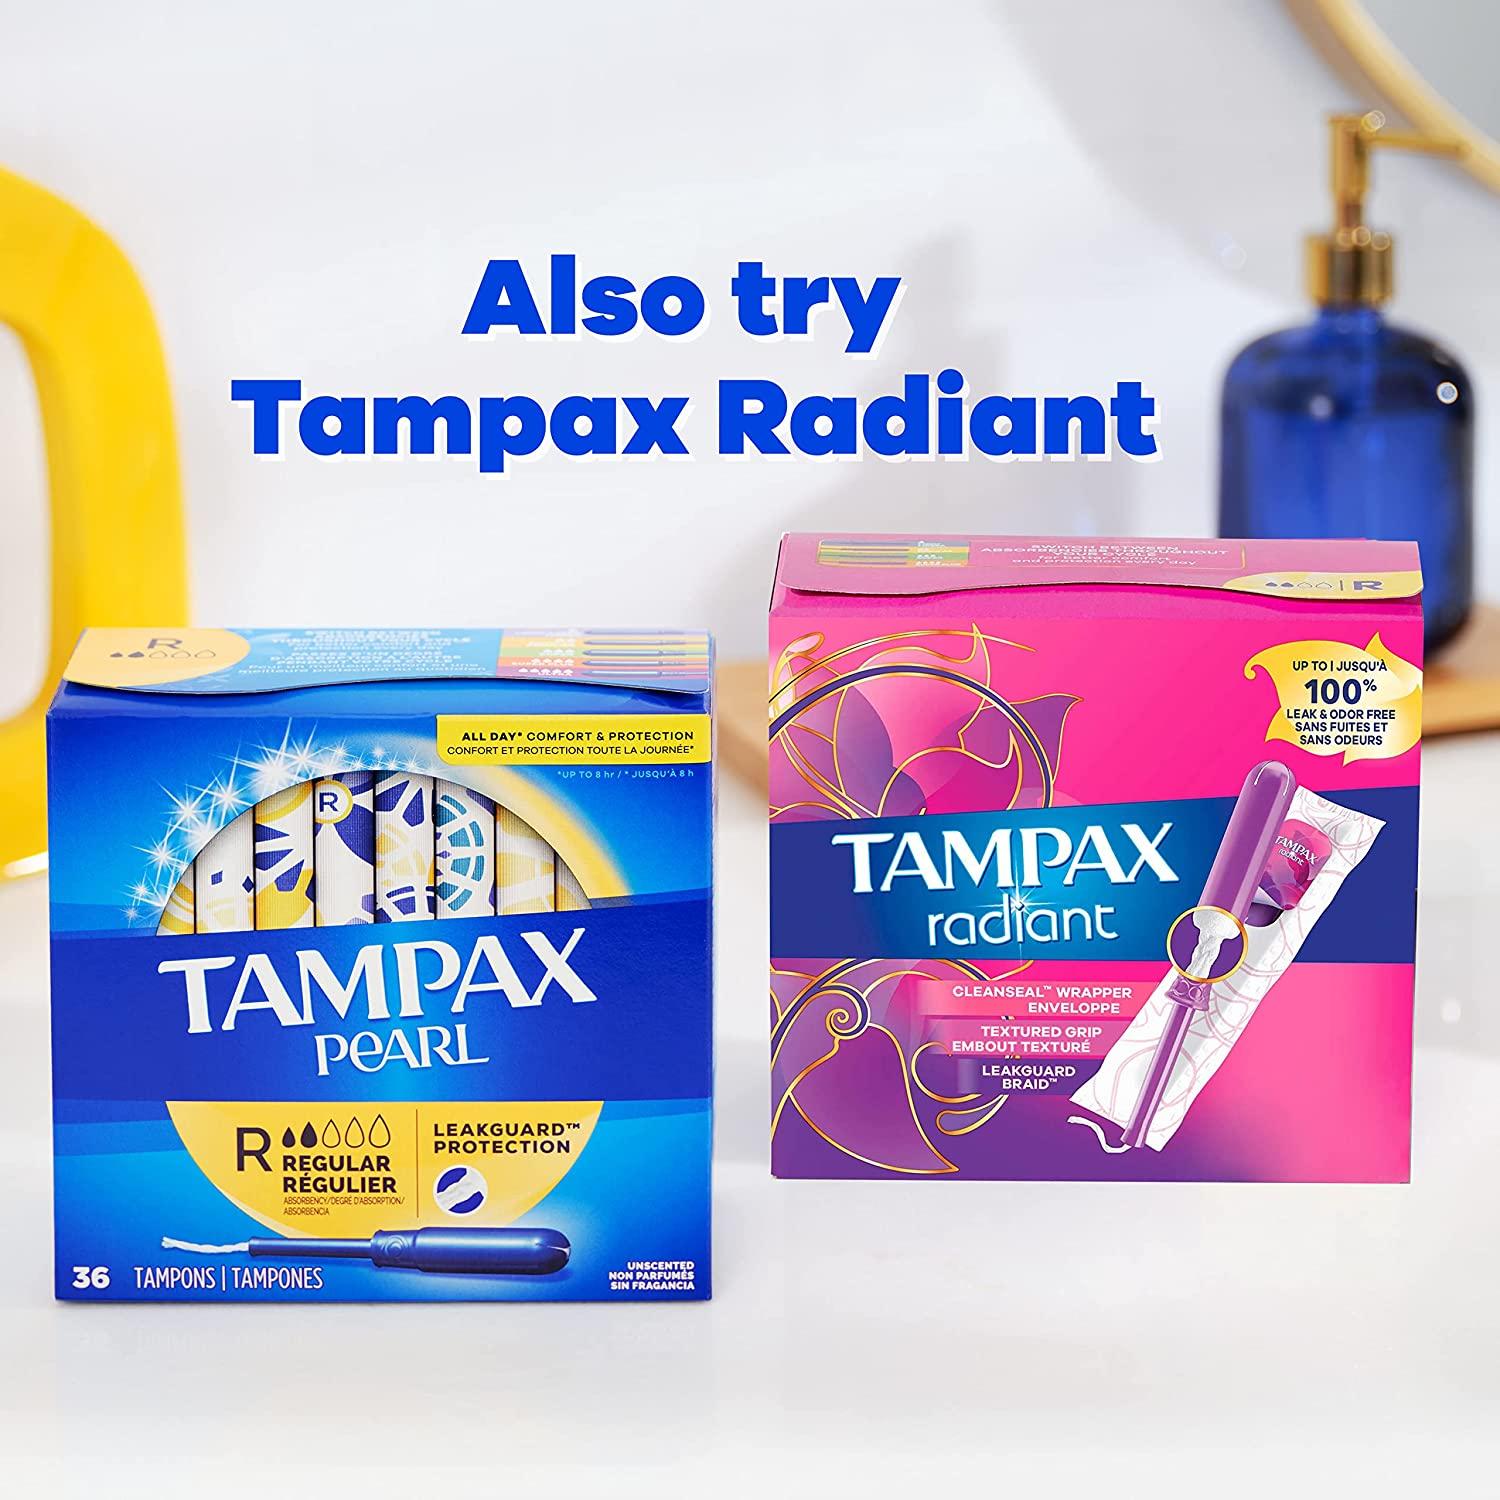 Tampax Pearl Tampons Regular Absorbency With Leakguard Braid